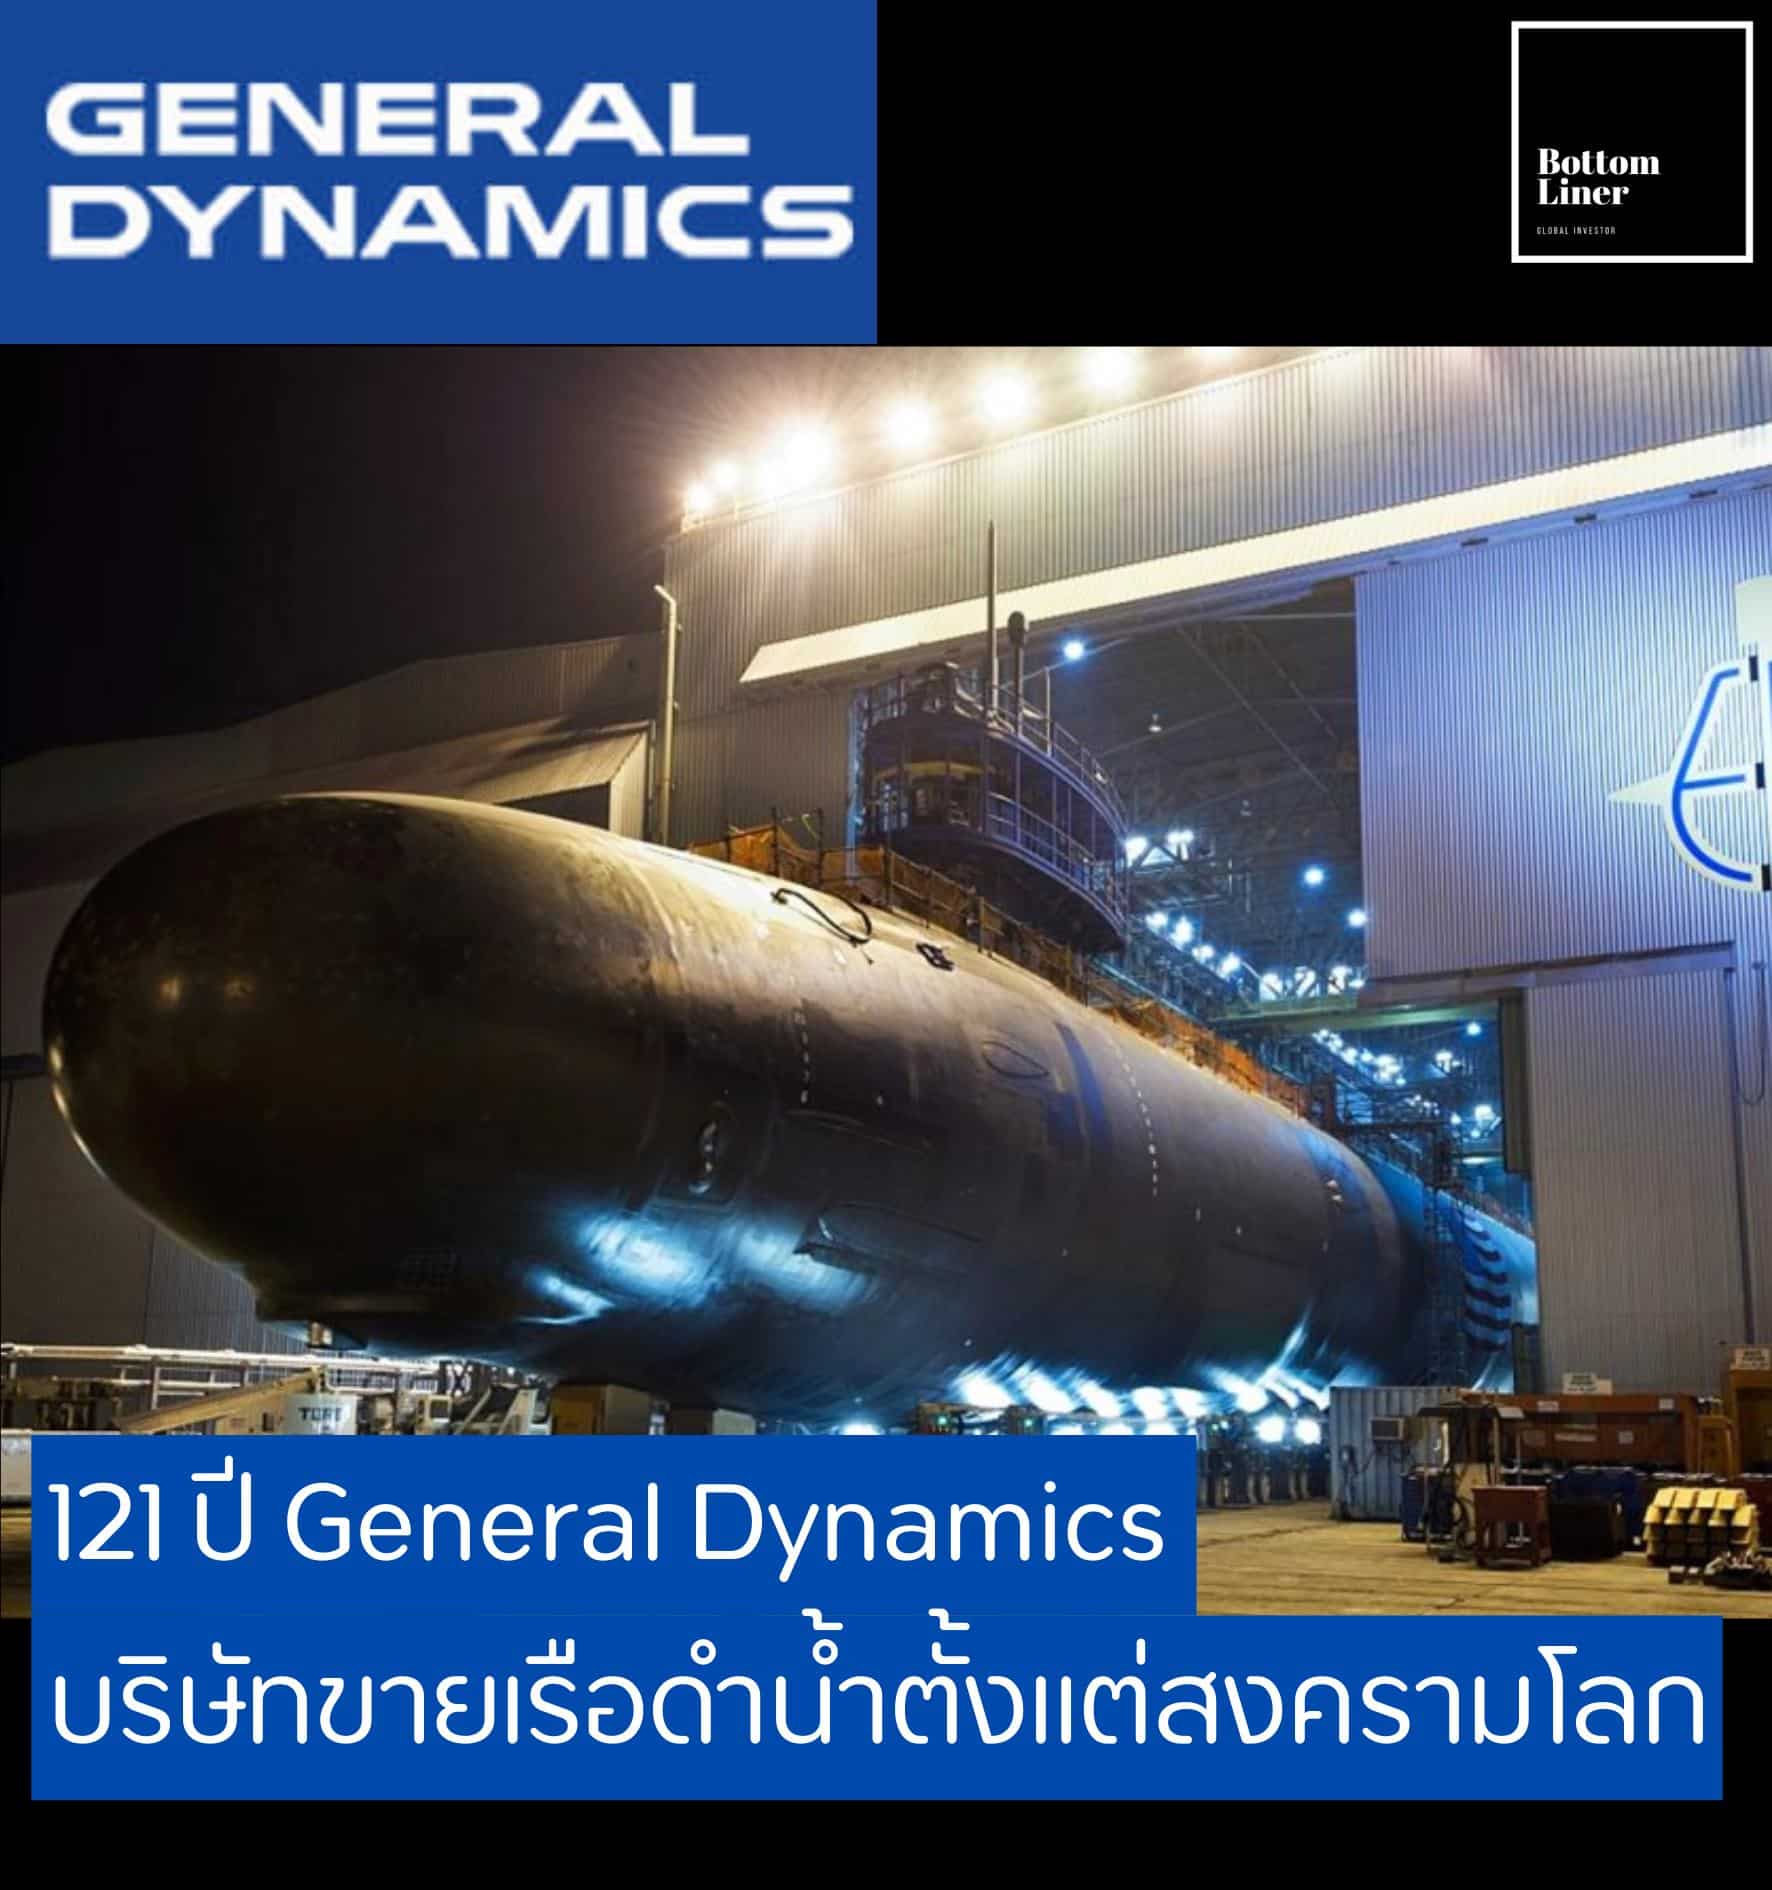 General Dynamics บริษัทขายเรือดำน้ำตั้งแต่สงครามโลก